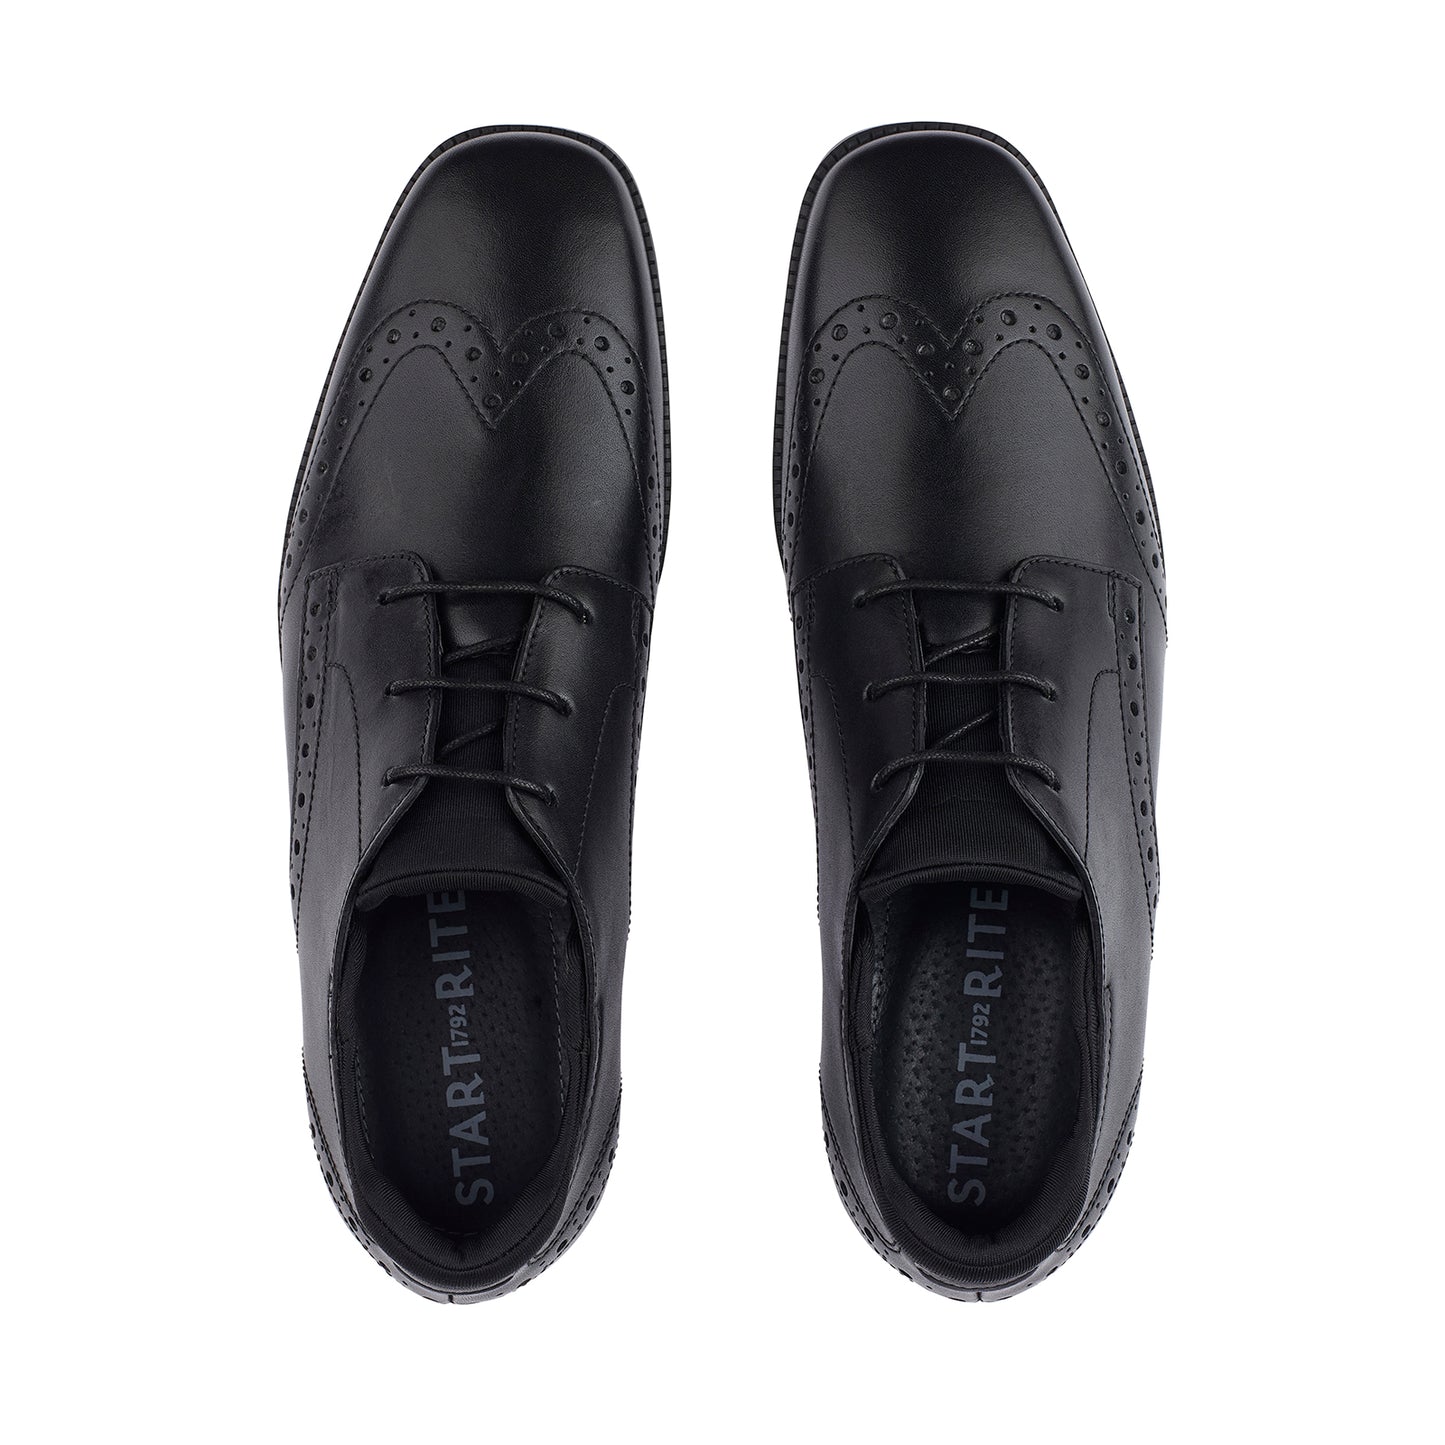 Tailor Black Leather Lace-up boys School Shoe